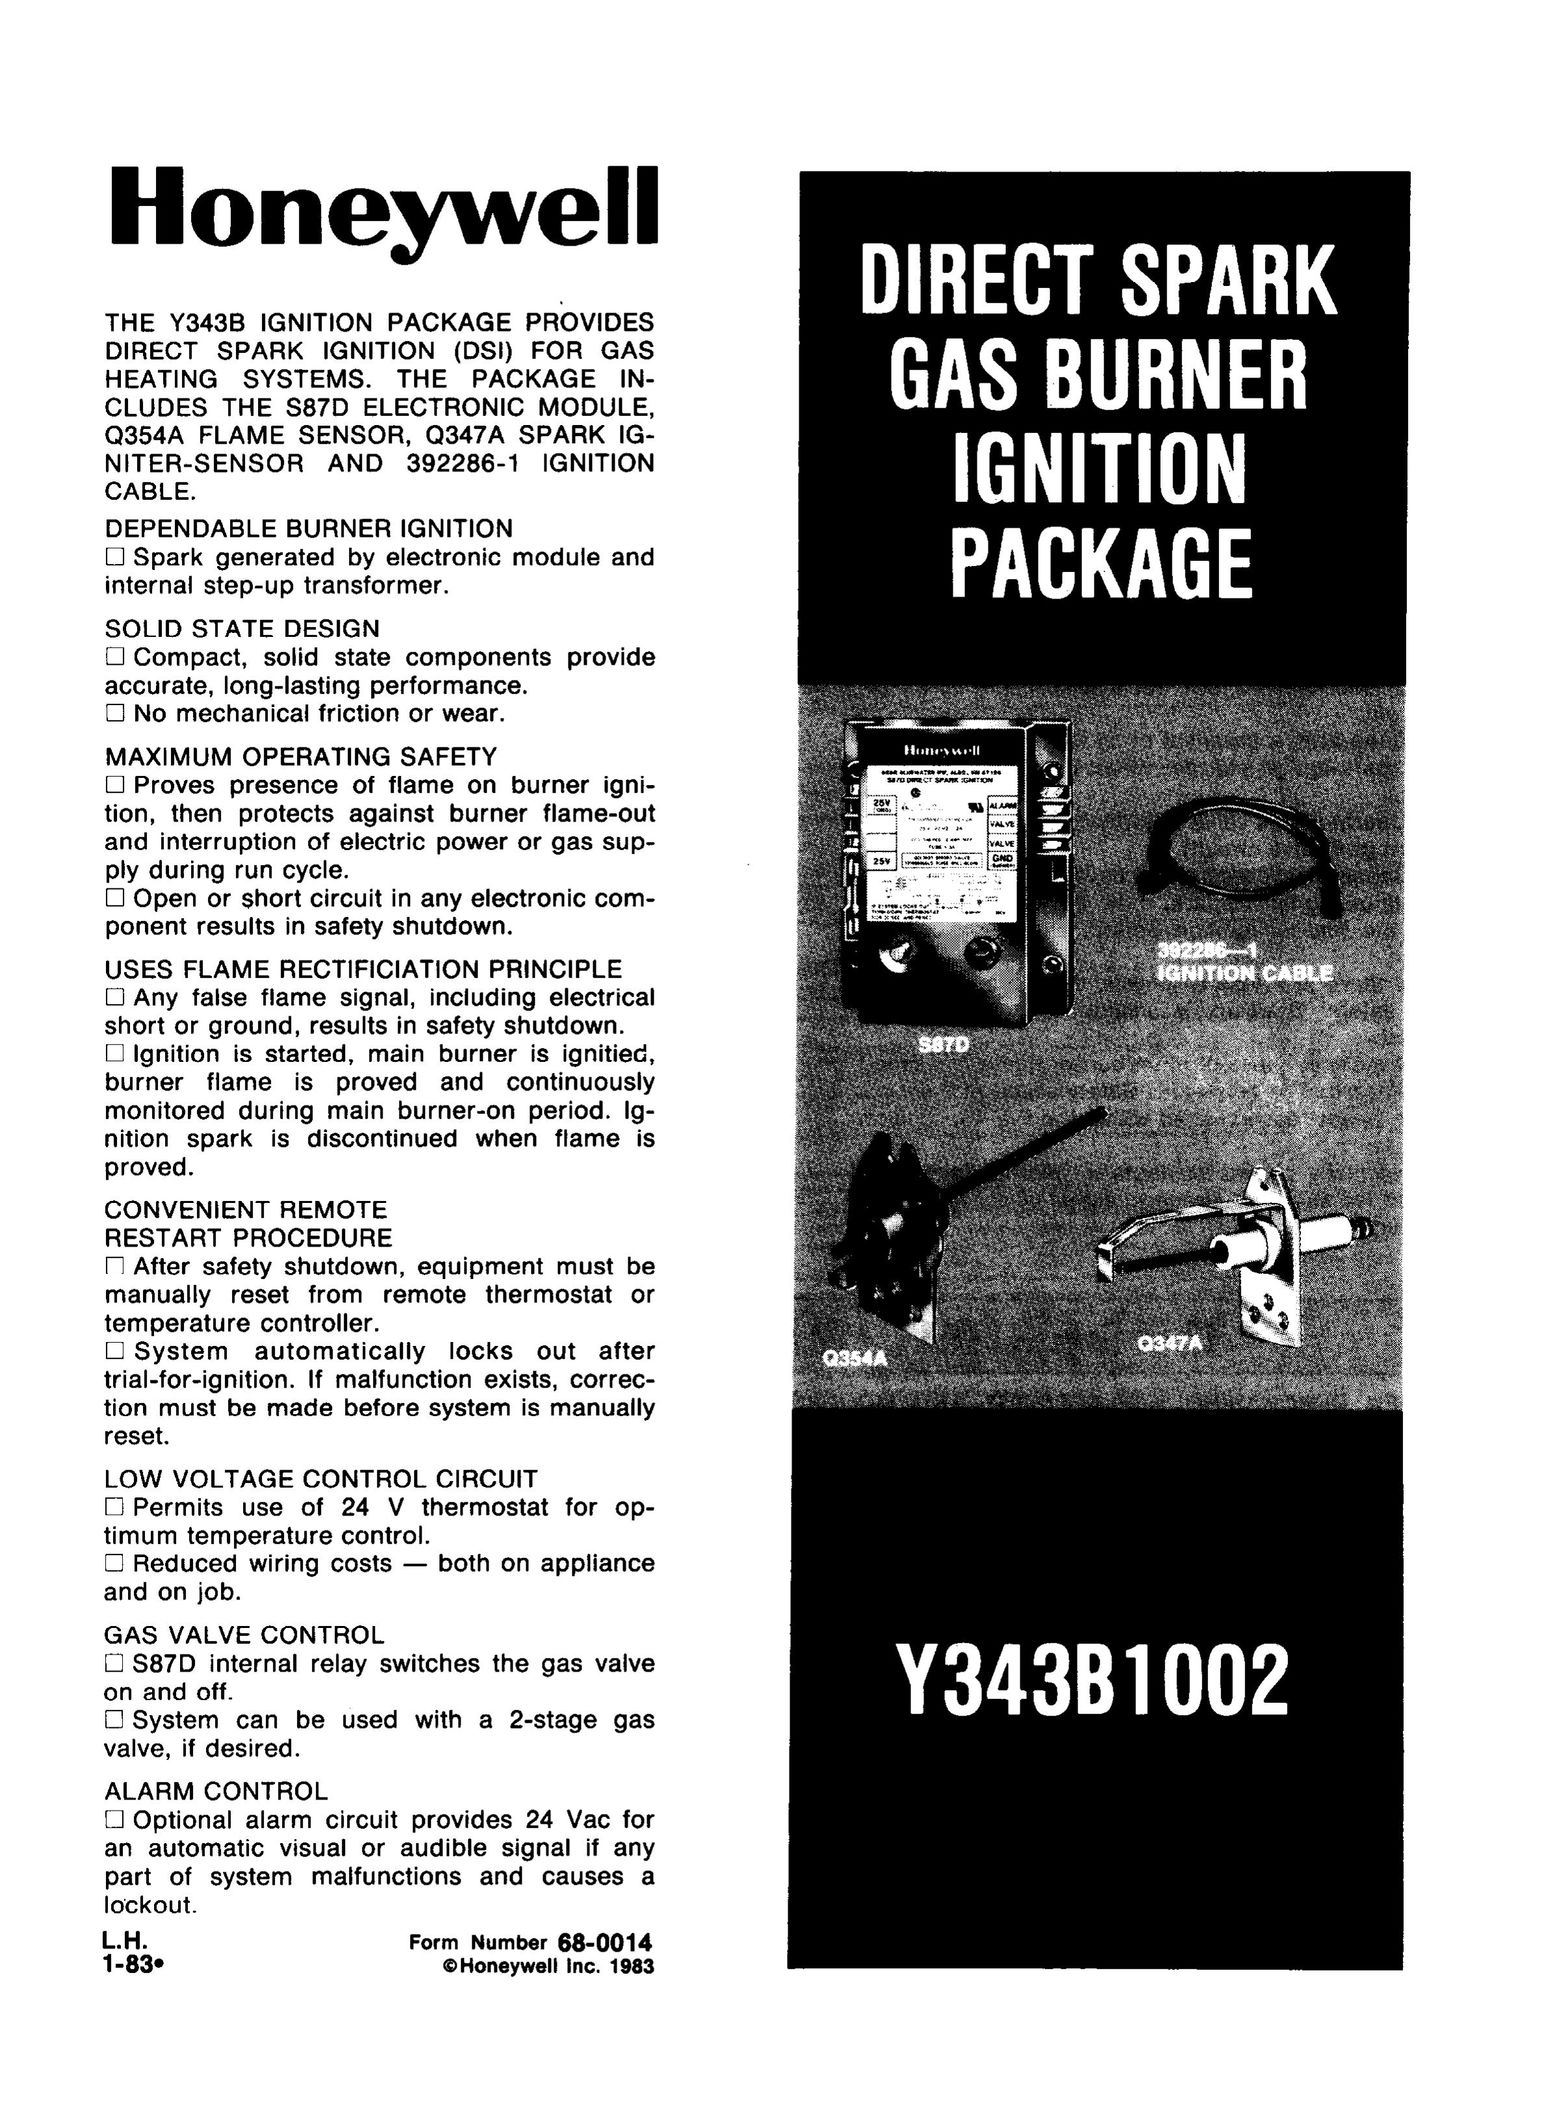 Honeywell Y343B1002 Burner User Manual